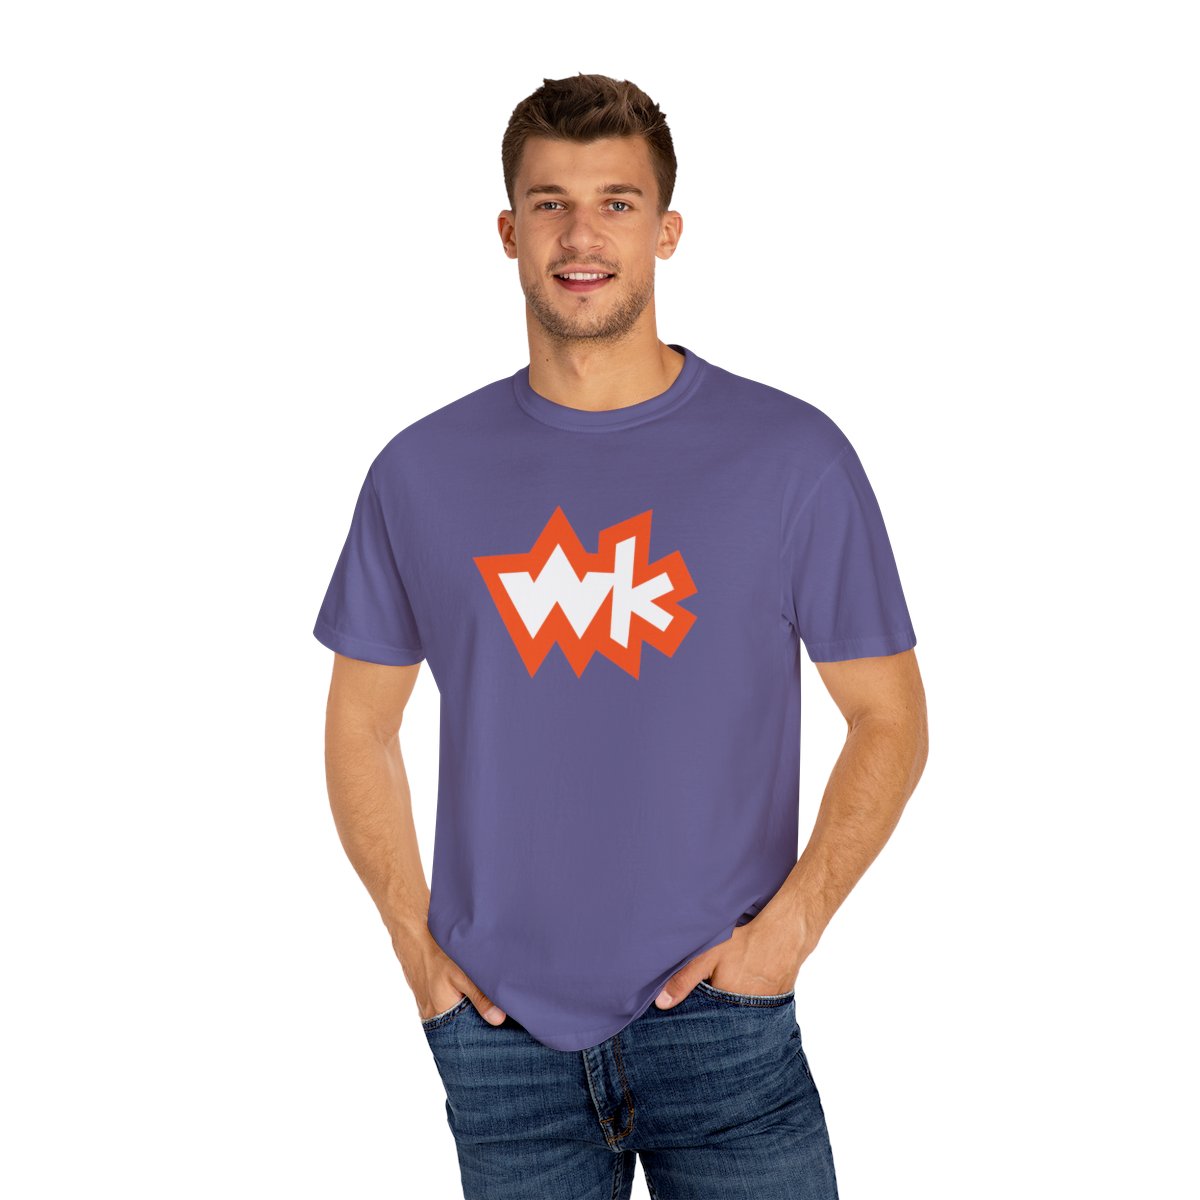 WK Adult T-Shirt product thumbnail image